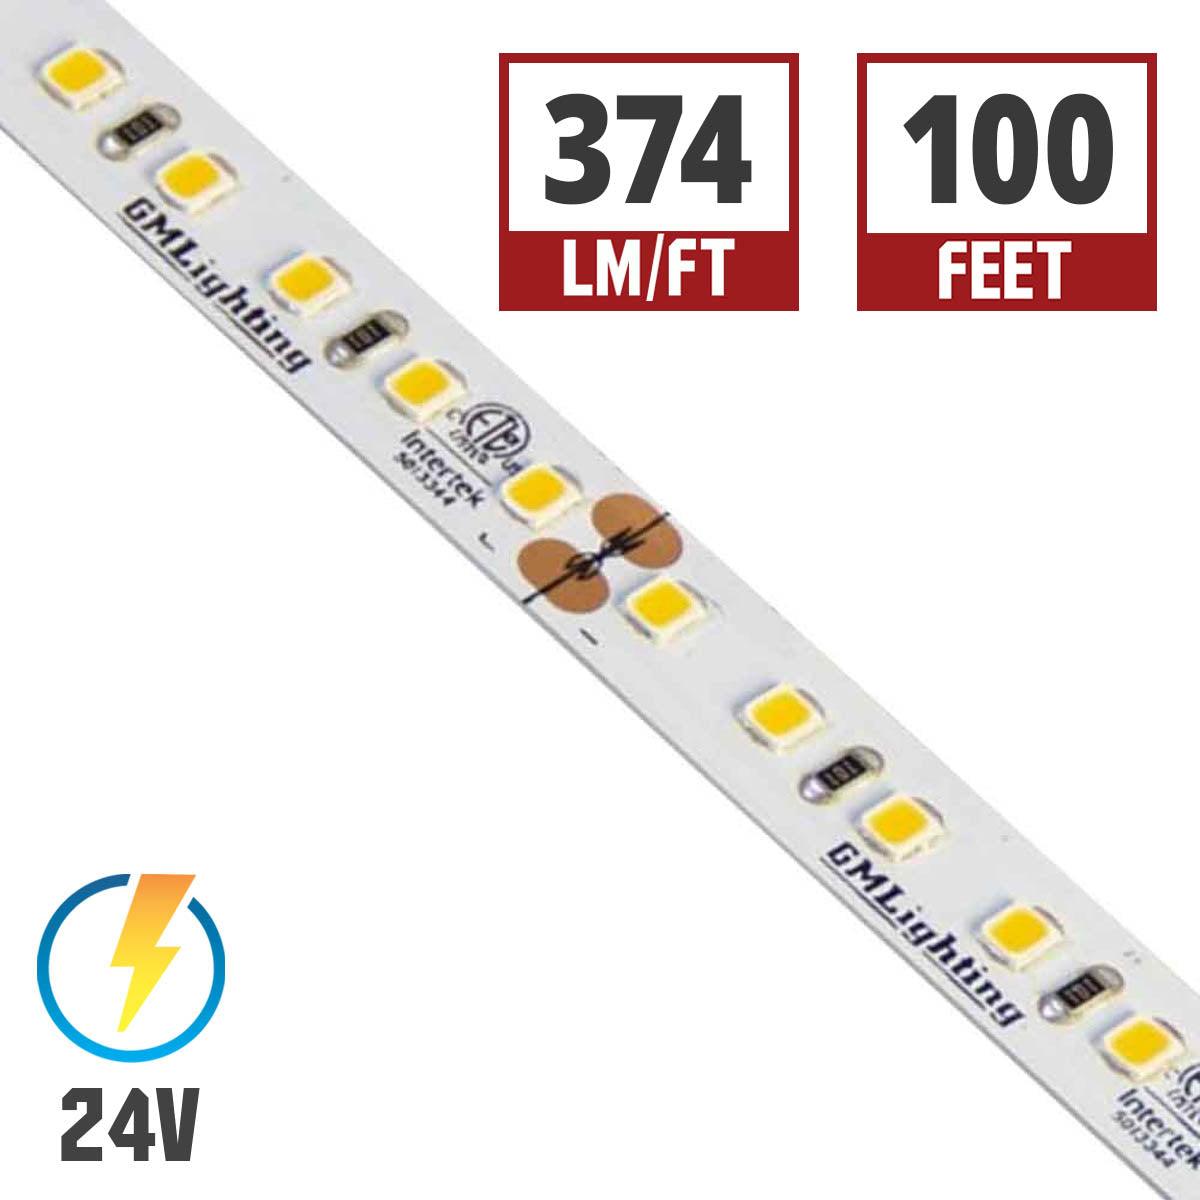 LTR-P Pro LED Strip Light, 4.5 Watts per ft, 370 Lumens per Ft, 24V